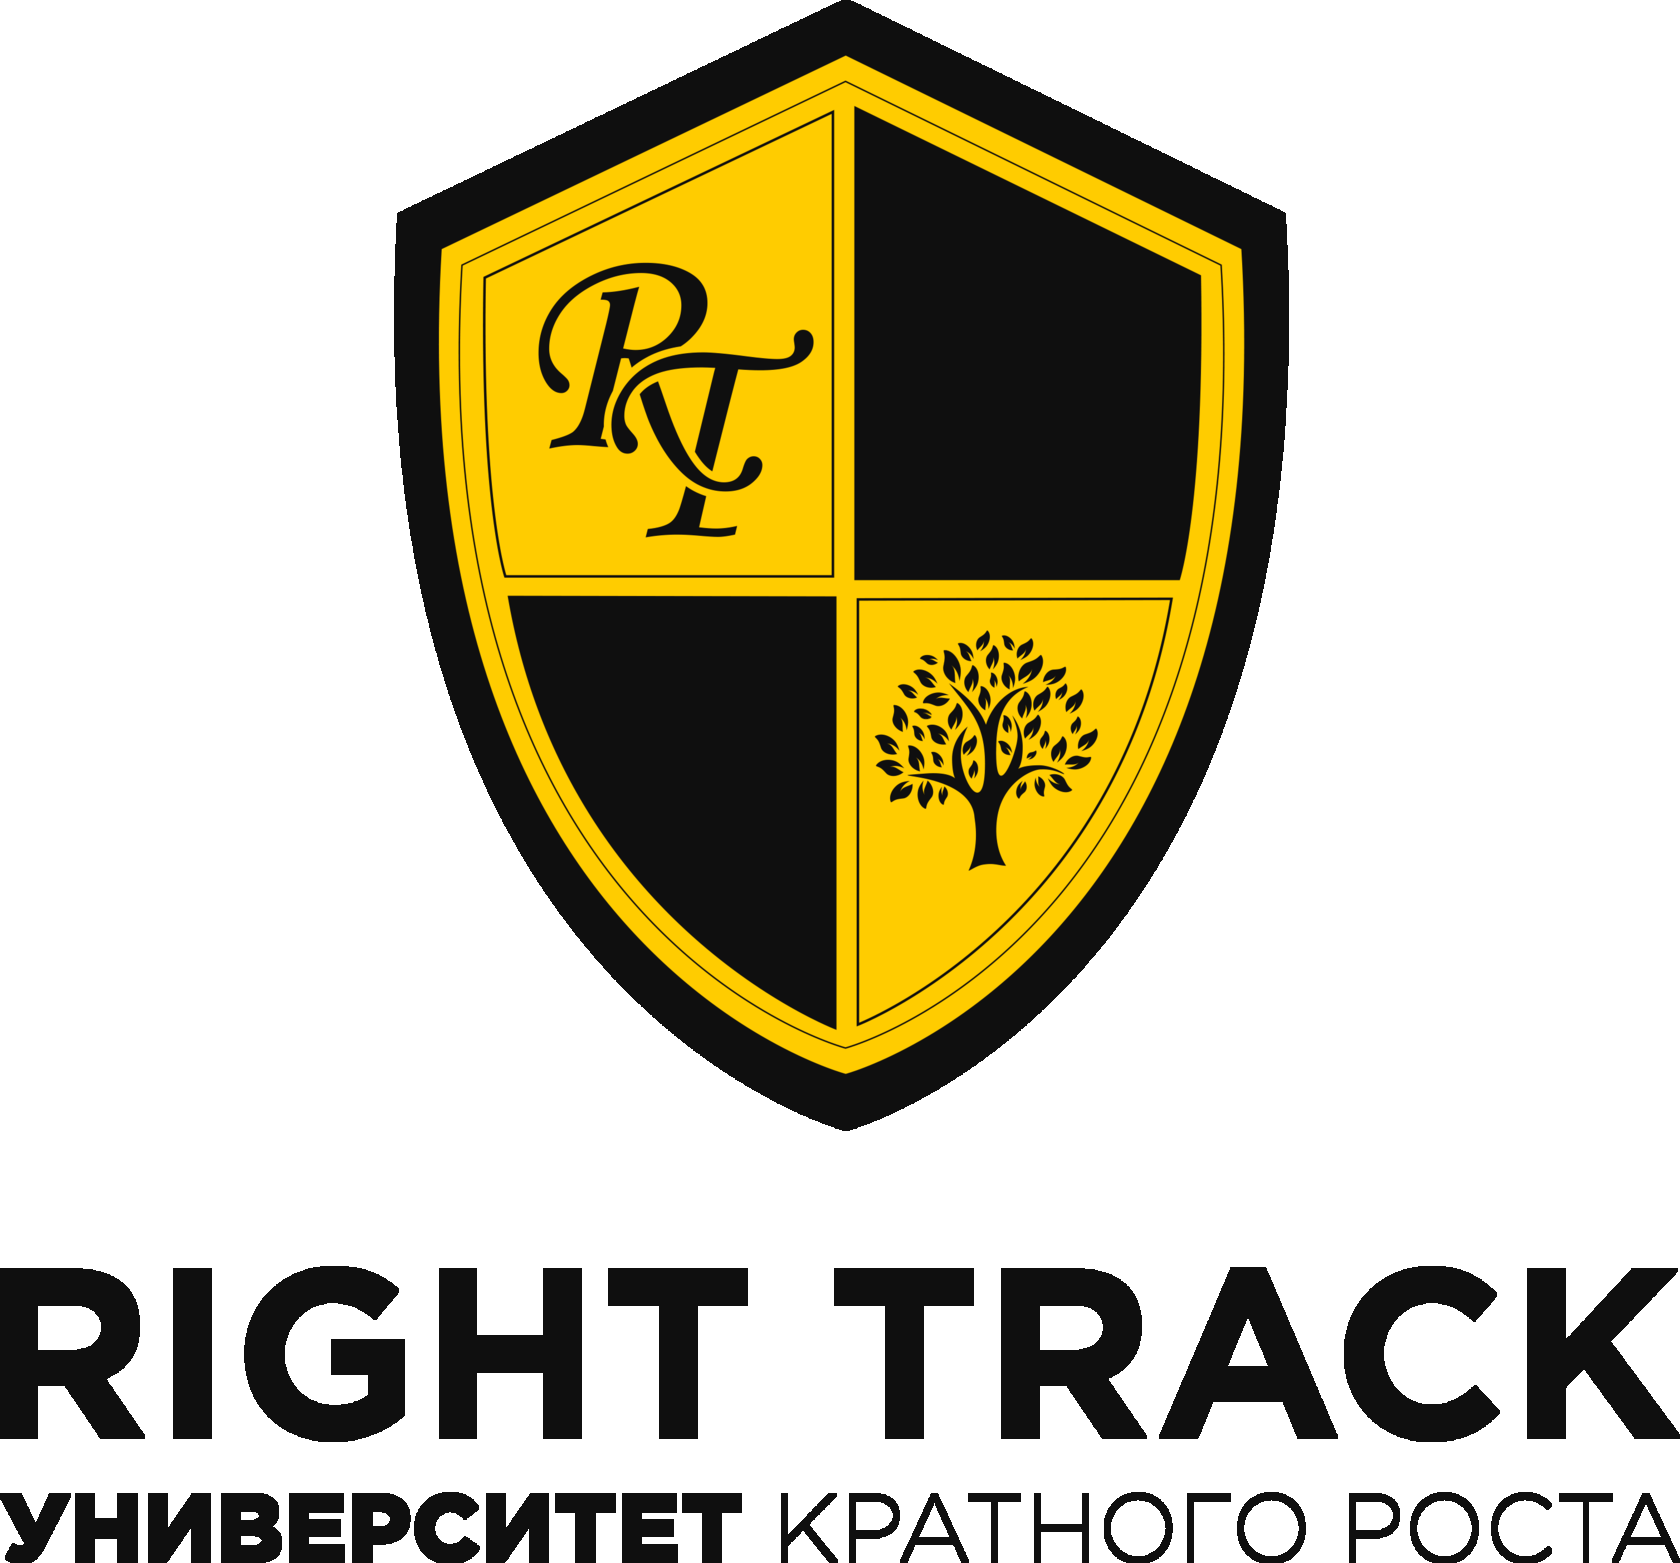 Right Track